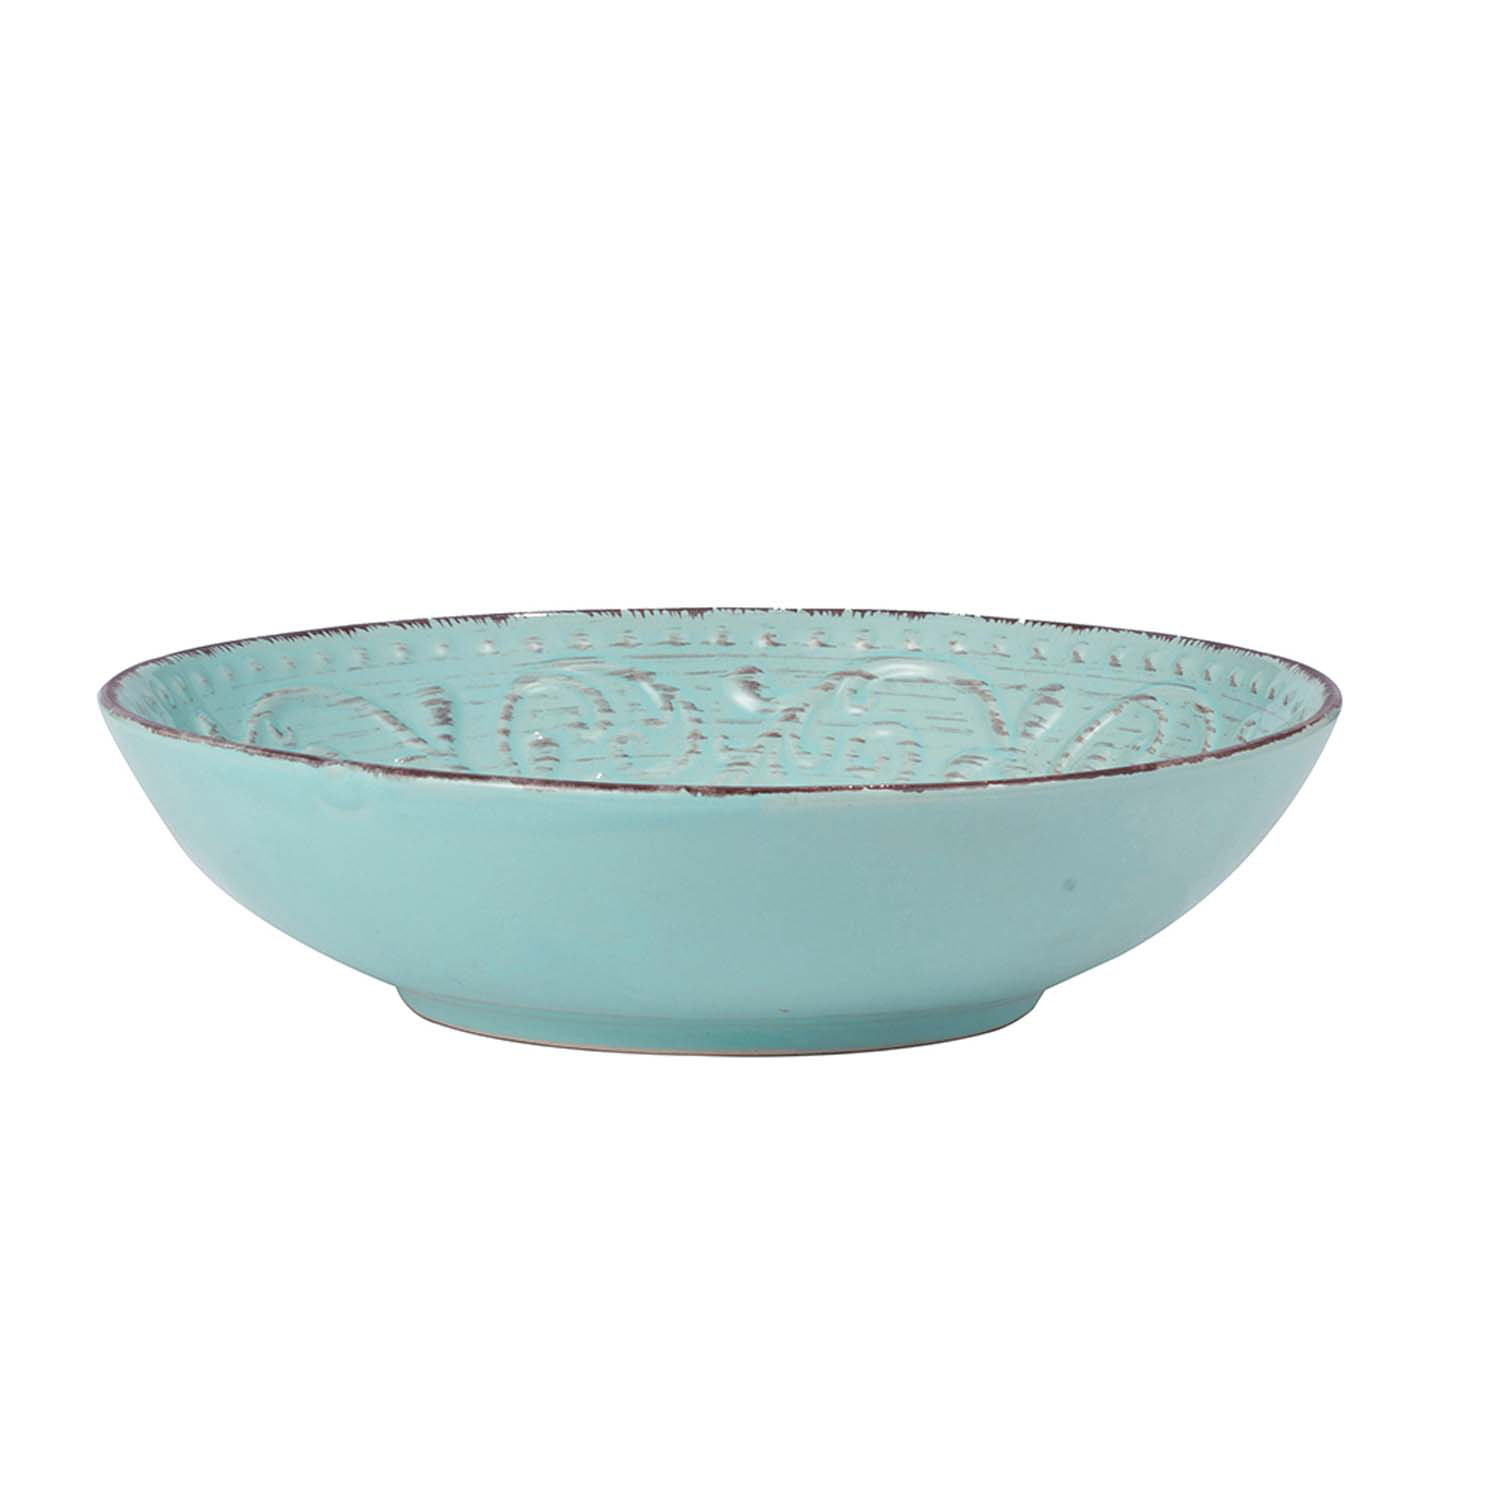 standstone ceramic handmade salad bowl Large bowl or small salad bowl in white glazed stoneware handmade pottery Christmas gift bowl